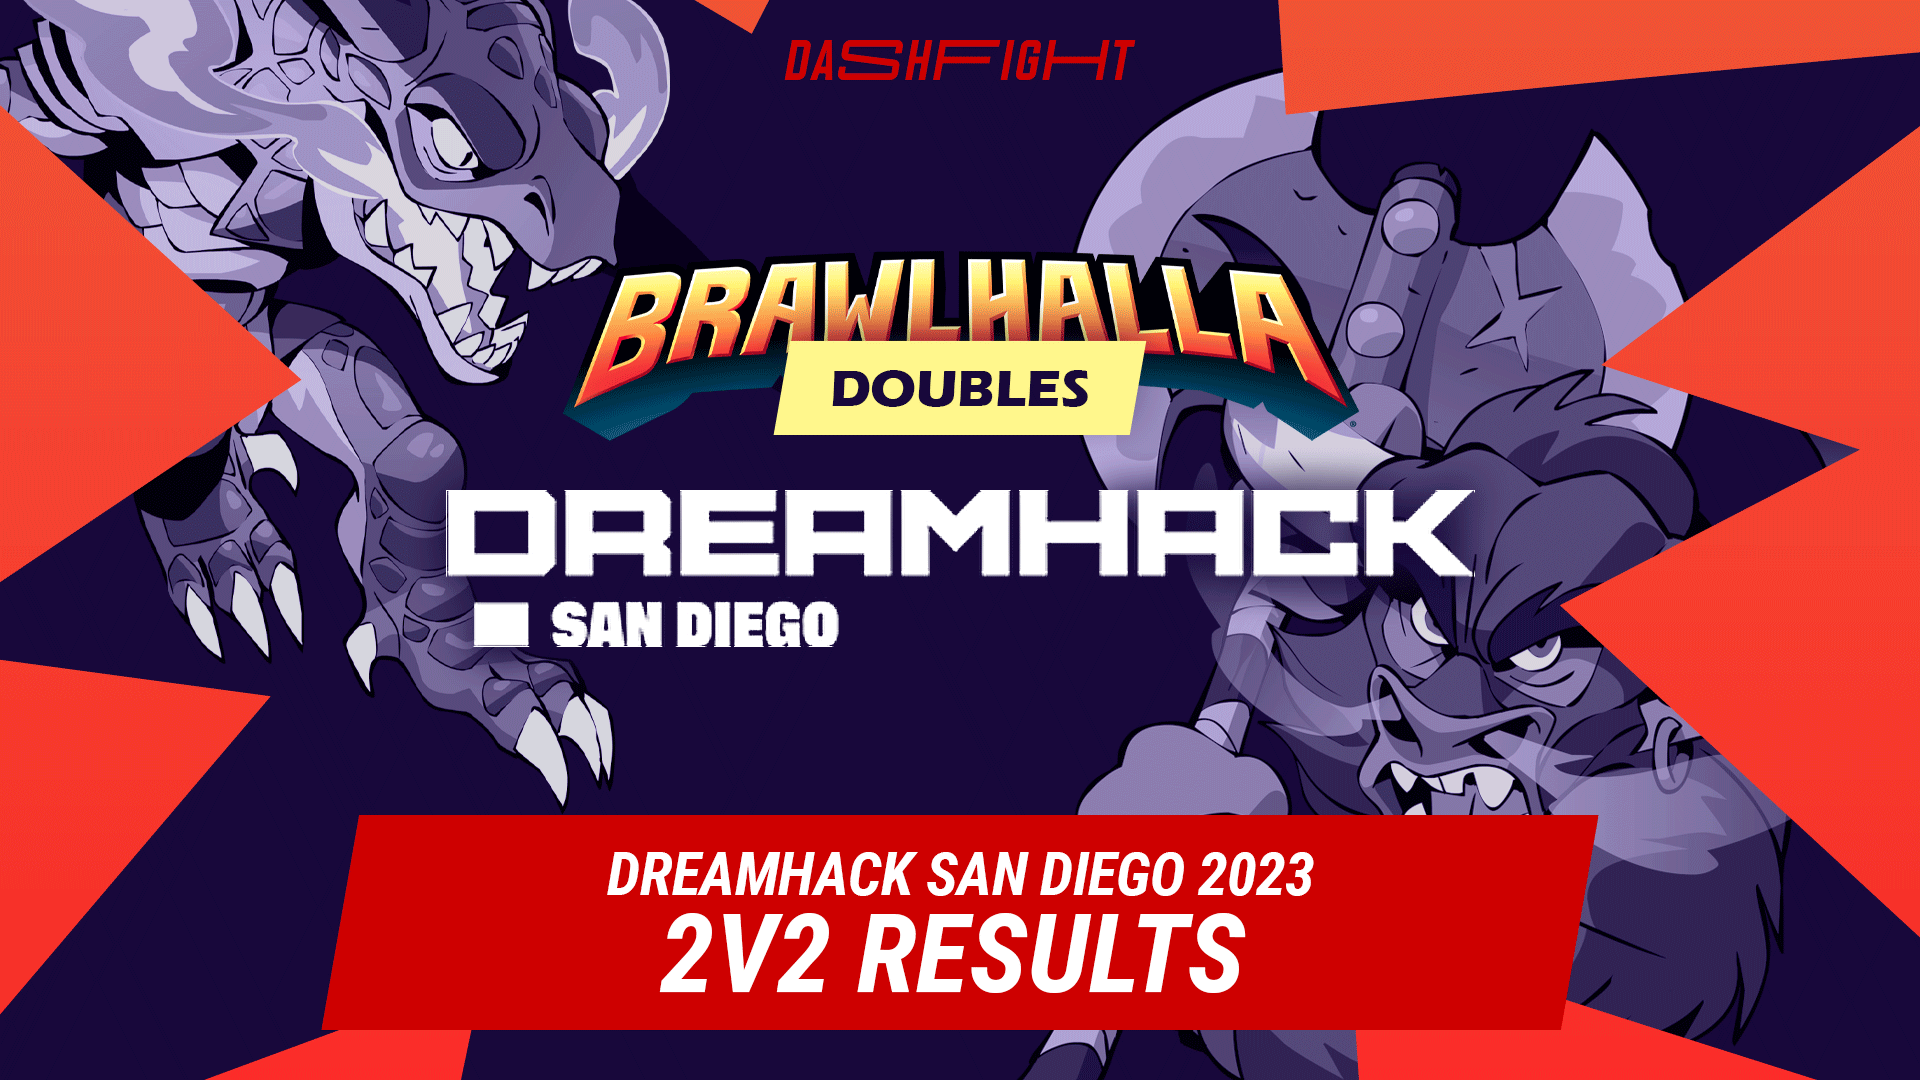 Brawlhalla at DreamHack San Diego 2023 Doubles DashFight